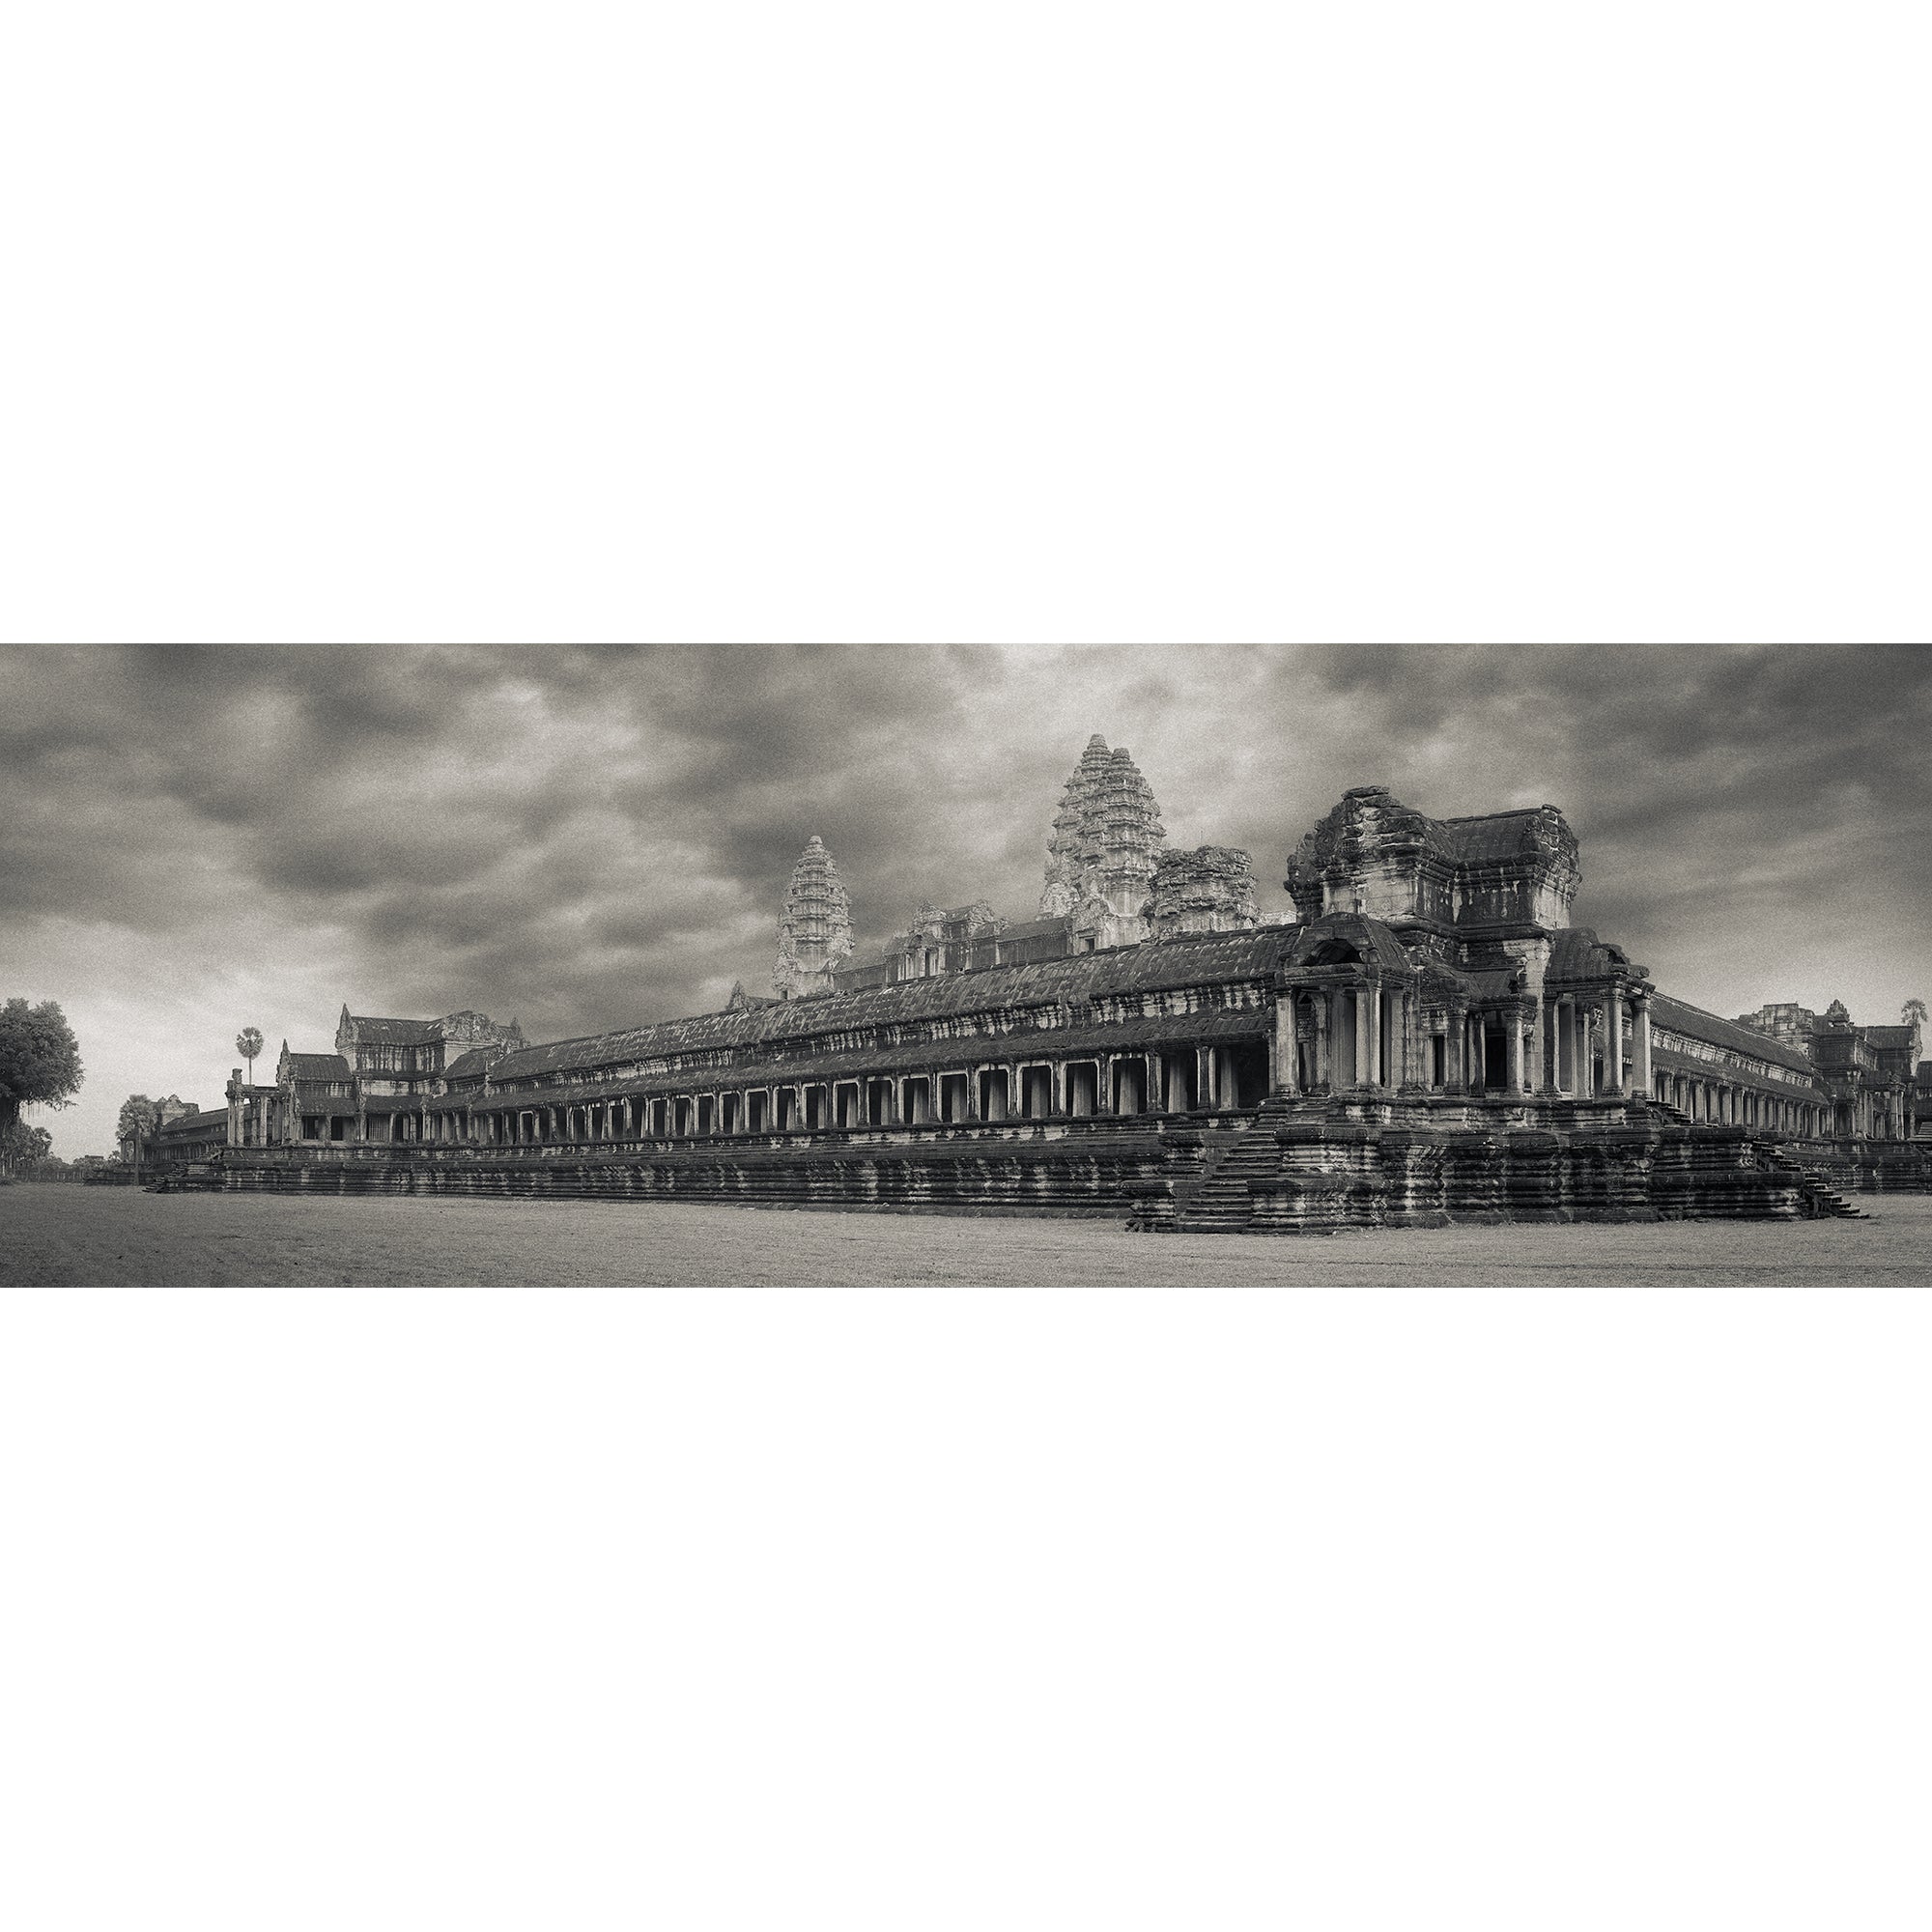 Gathering Storm, Angkor Wat Temple, Cambodia. 2021